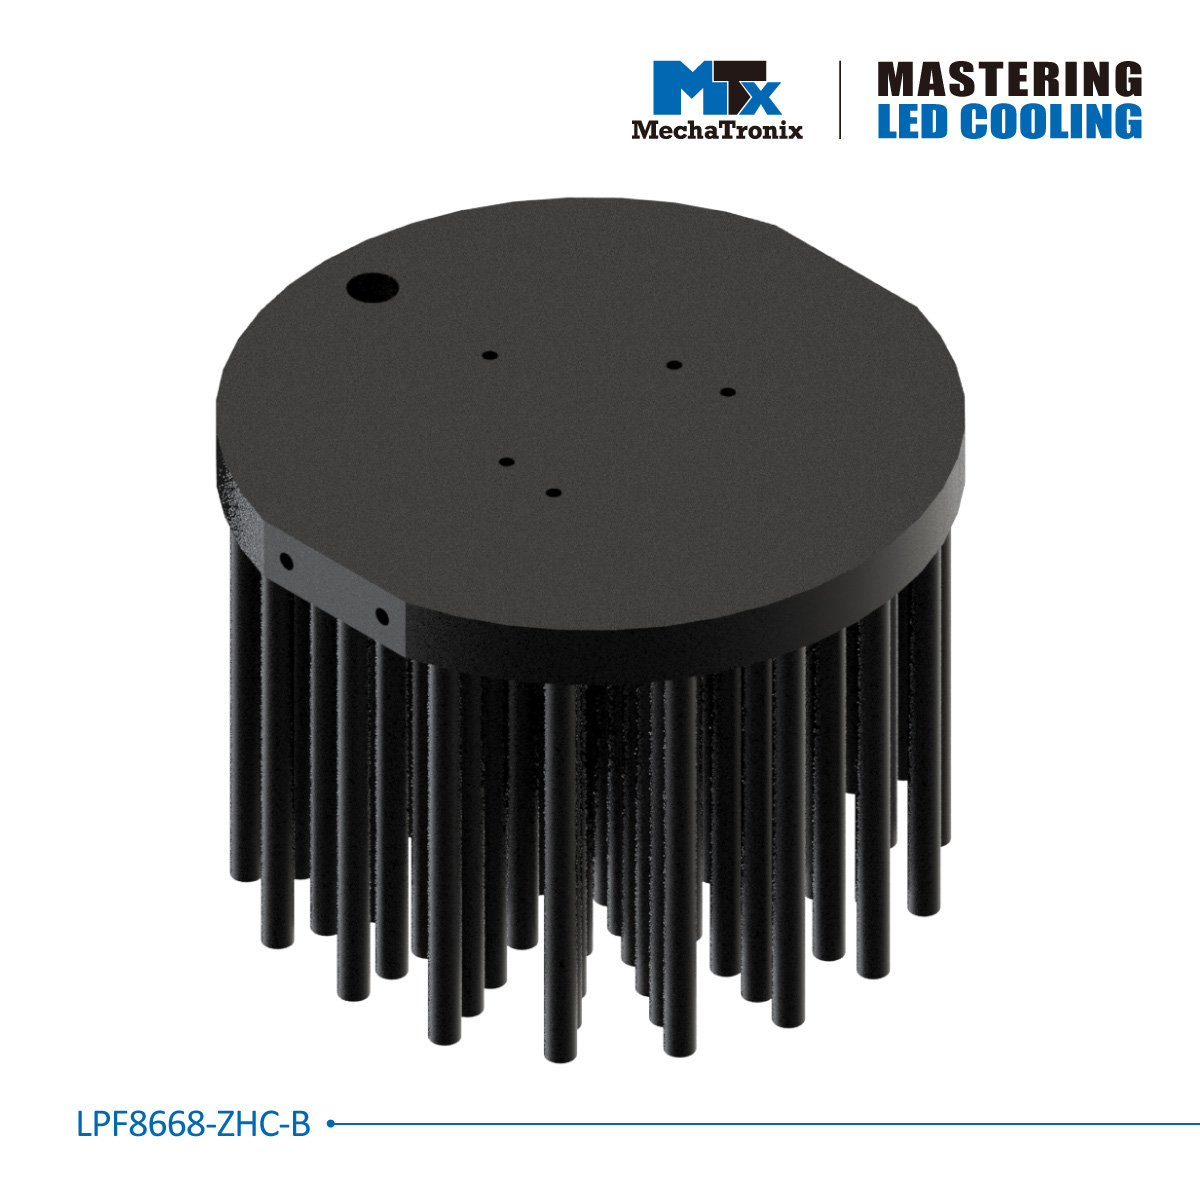 MechaTronix Heat Sink LPF11180-ZHE-B for LED <9600lm